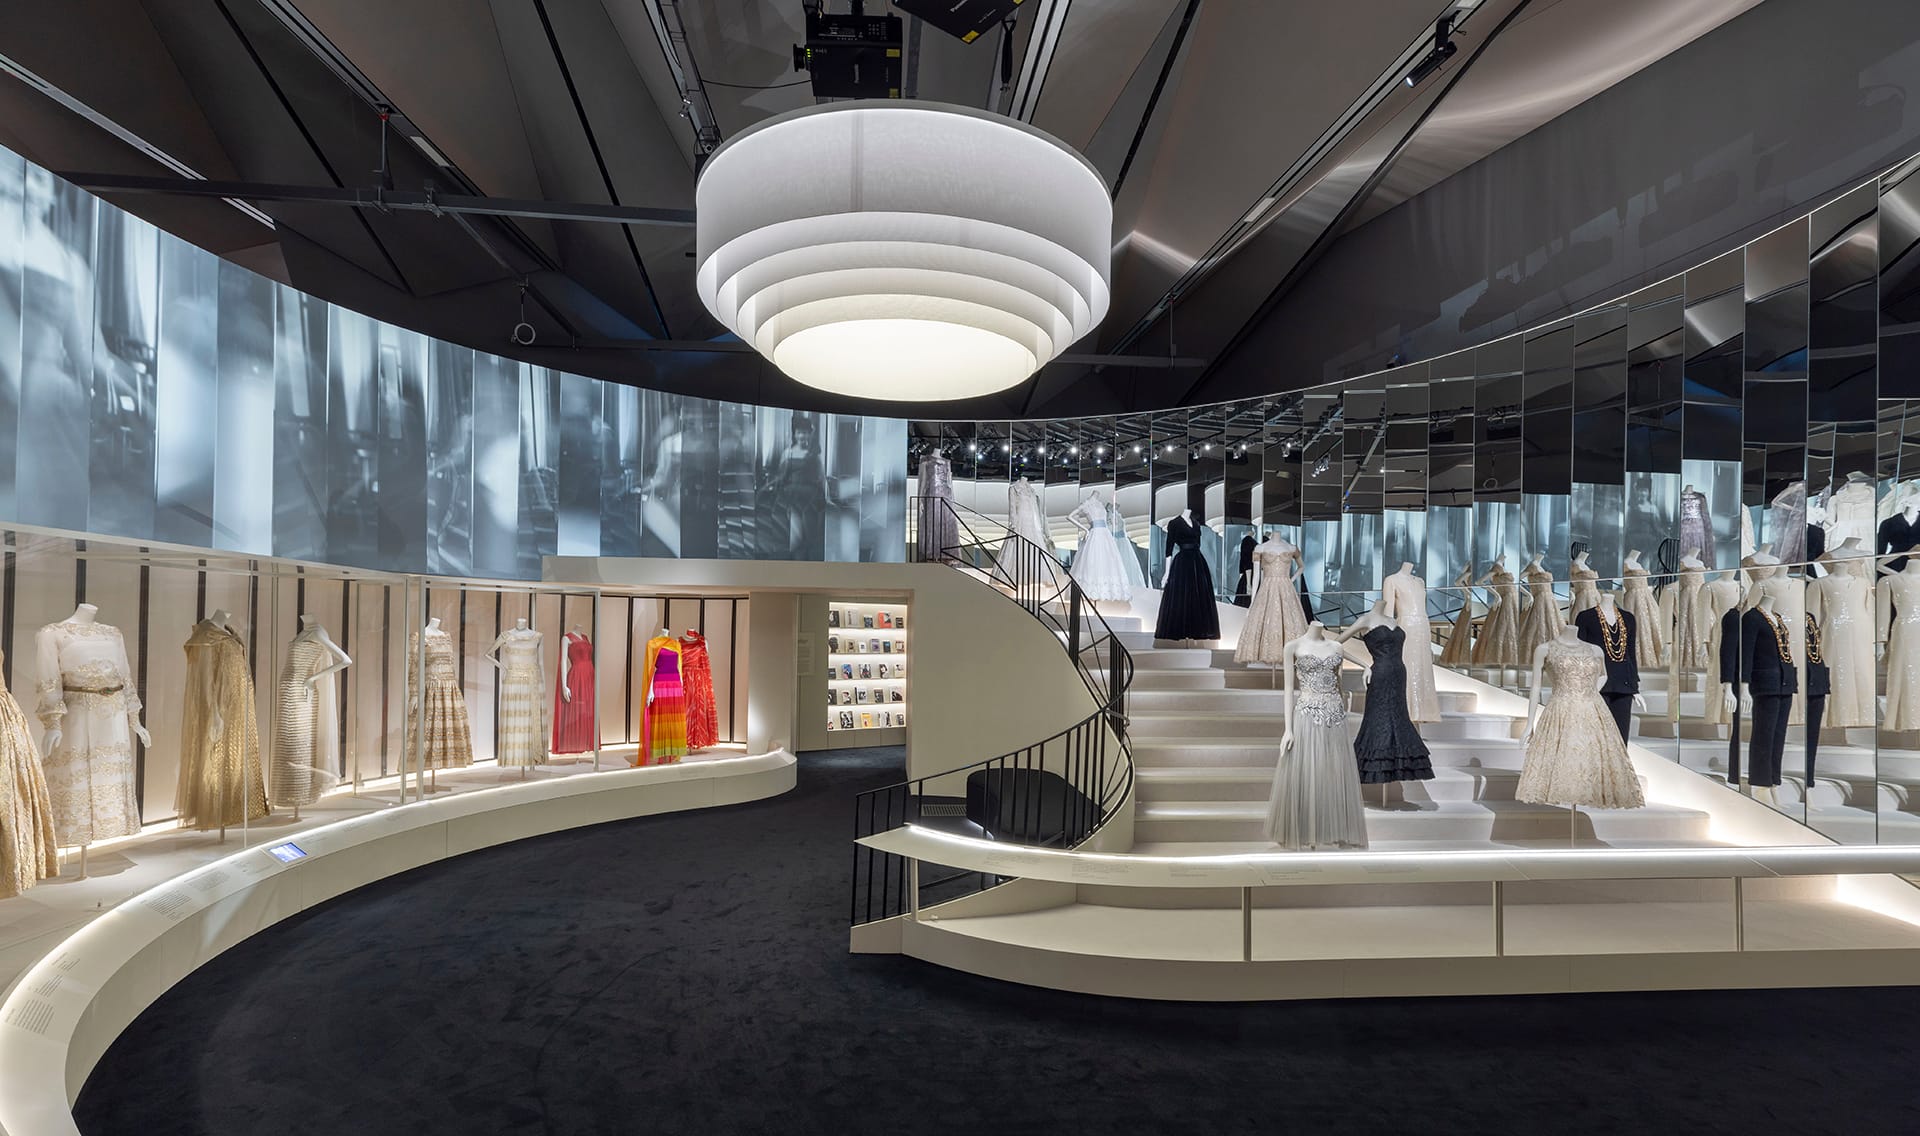 An Astounding Chanel Retrospective Opens at London’s Victoria & Albert Museum